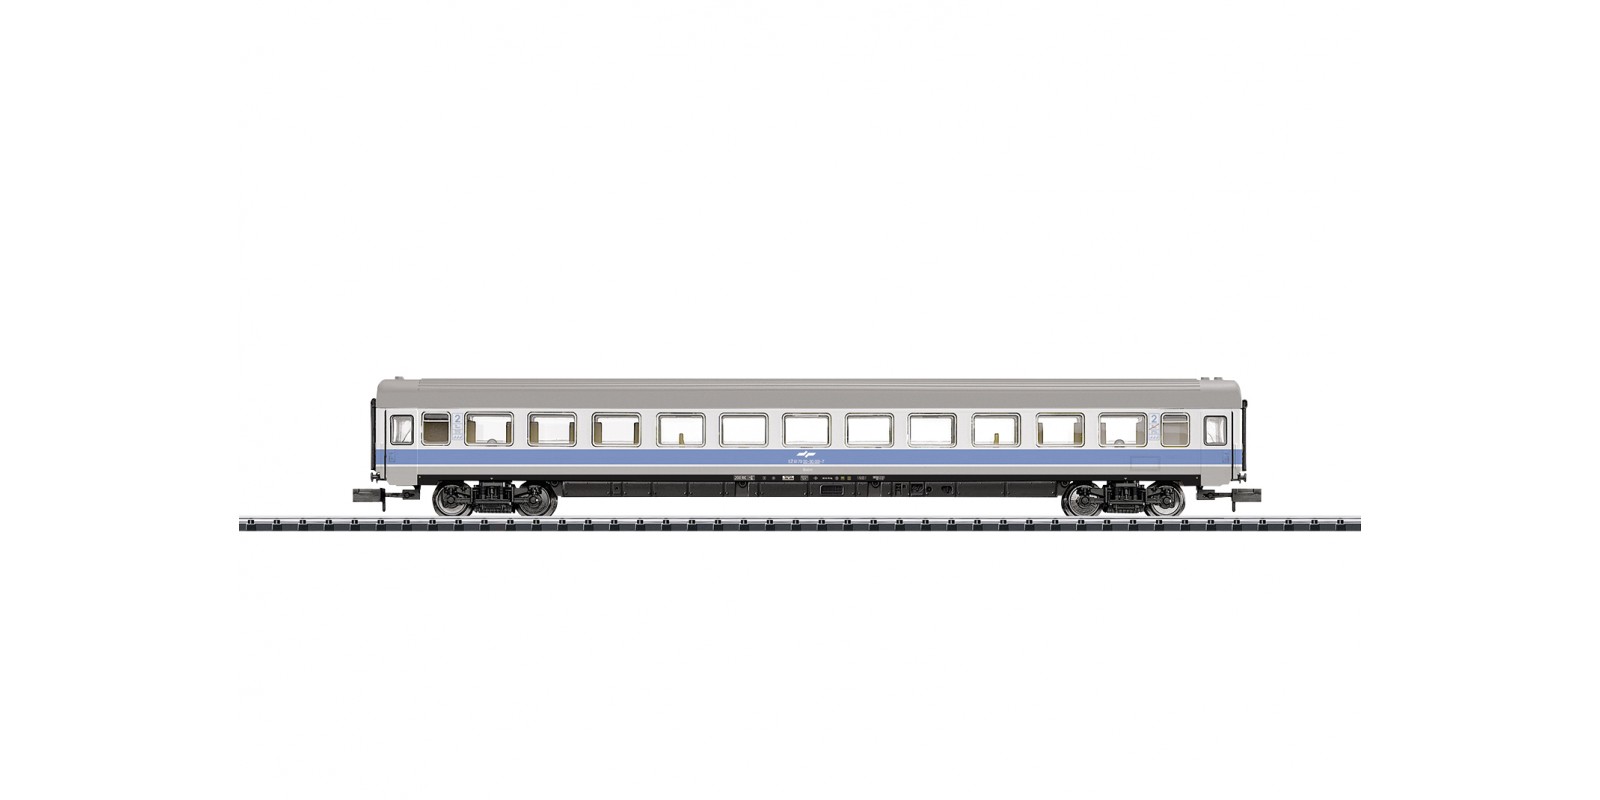 T15592 "MIMARA" Express Train Passenger Car